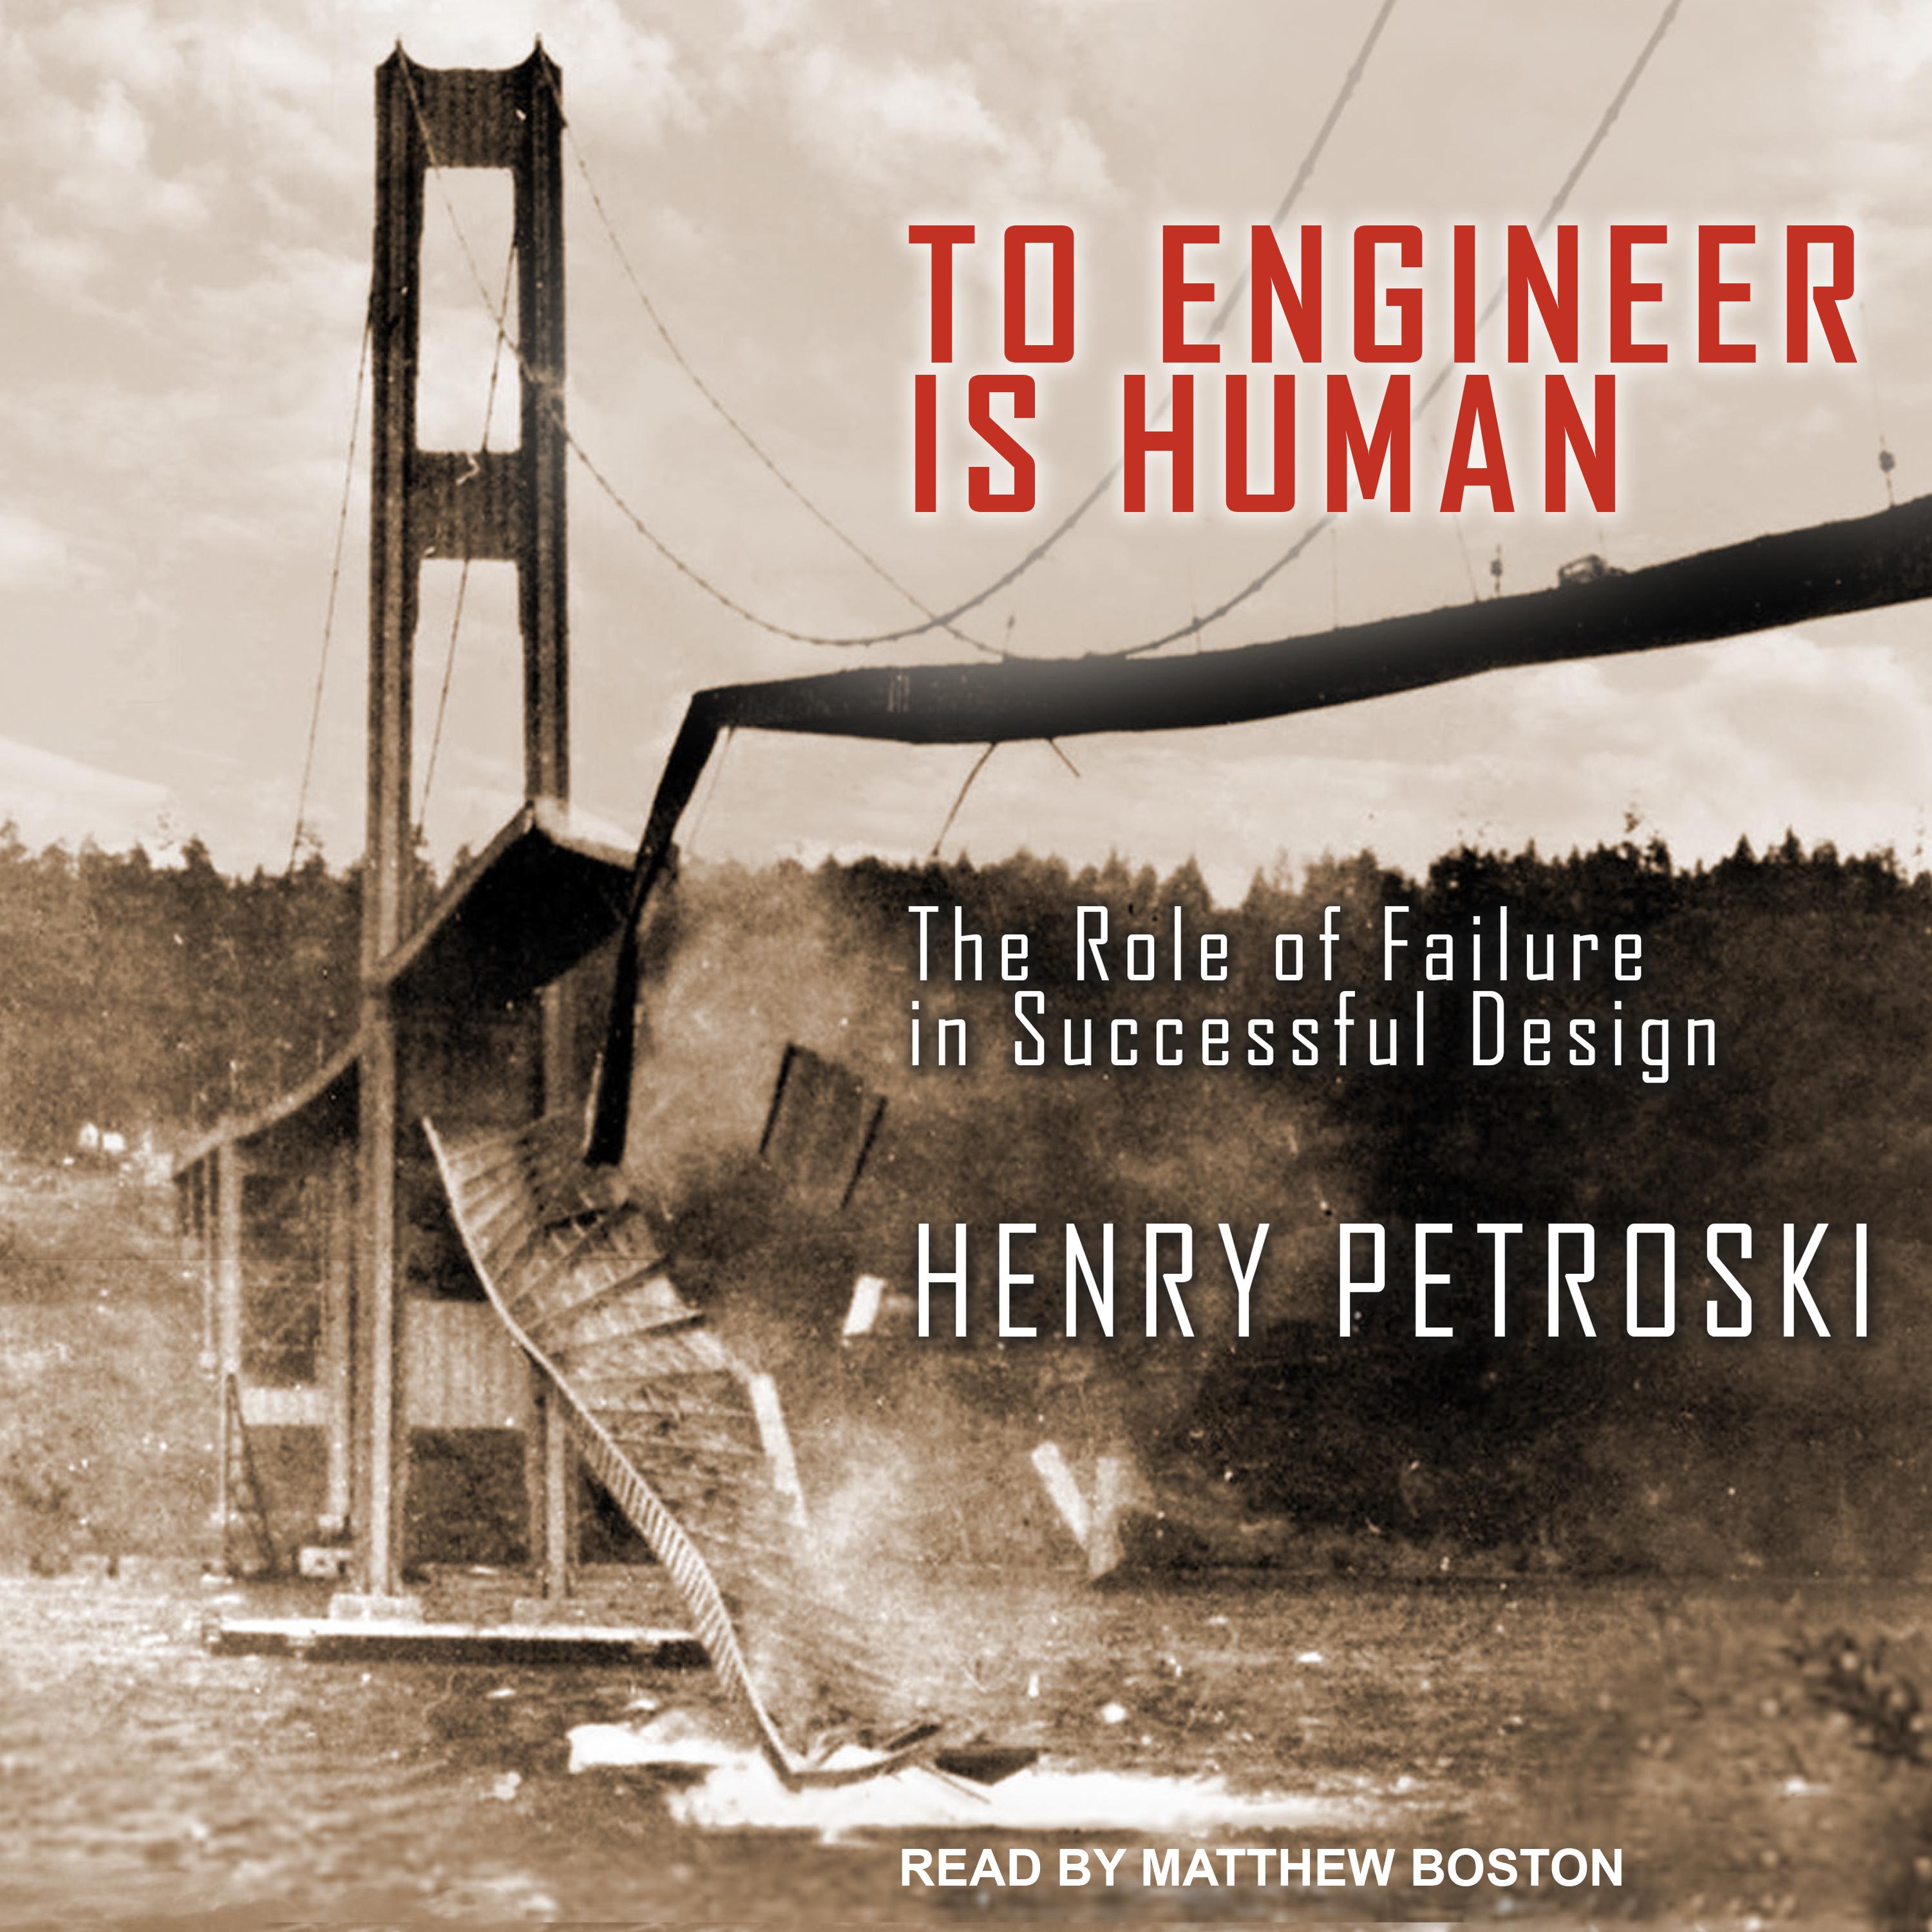 To Engineer Is Human Audiobook Listen Instantly!